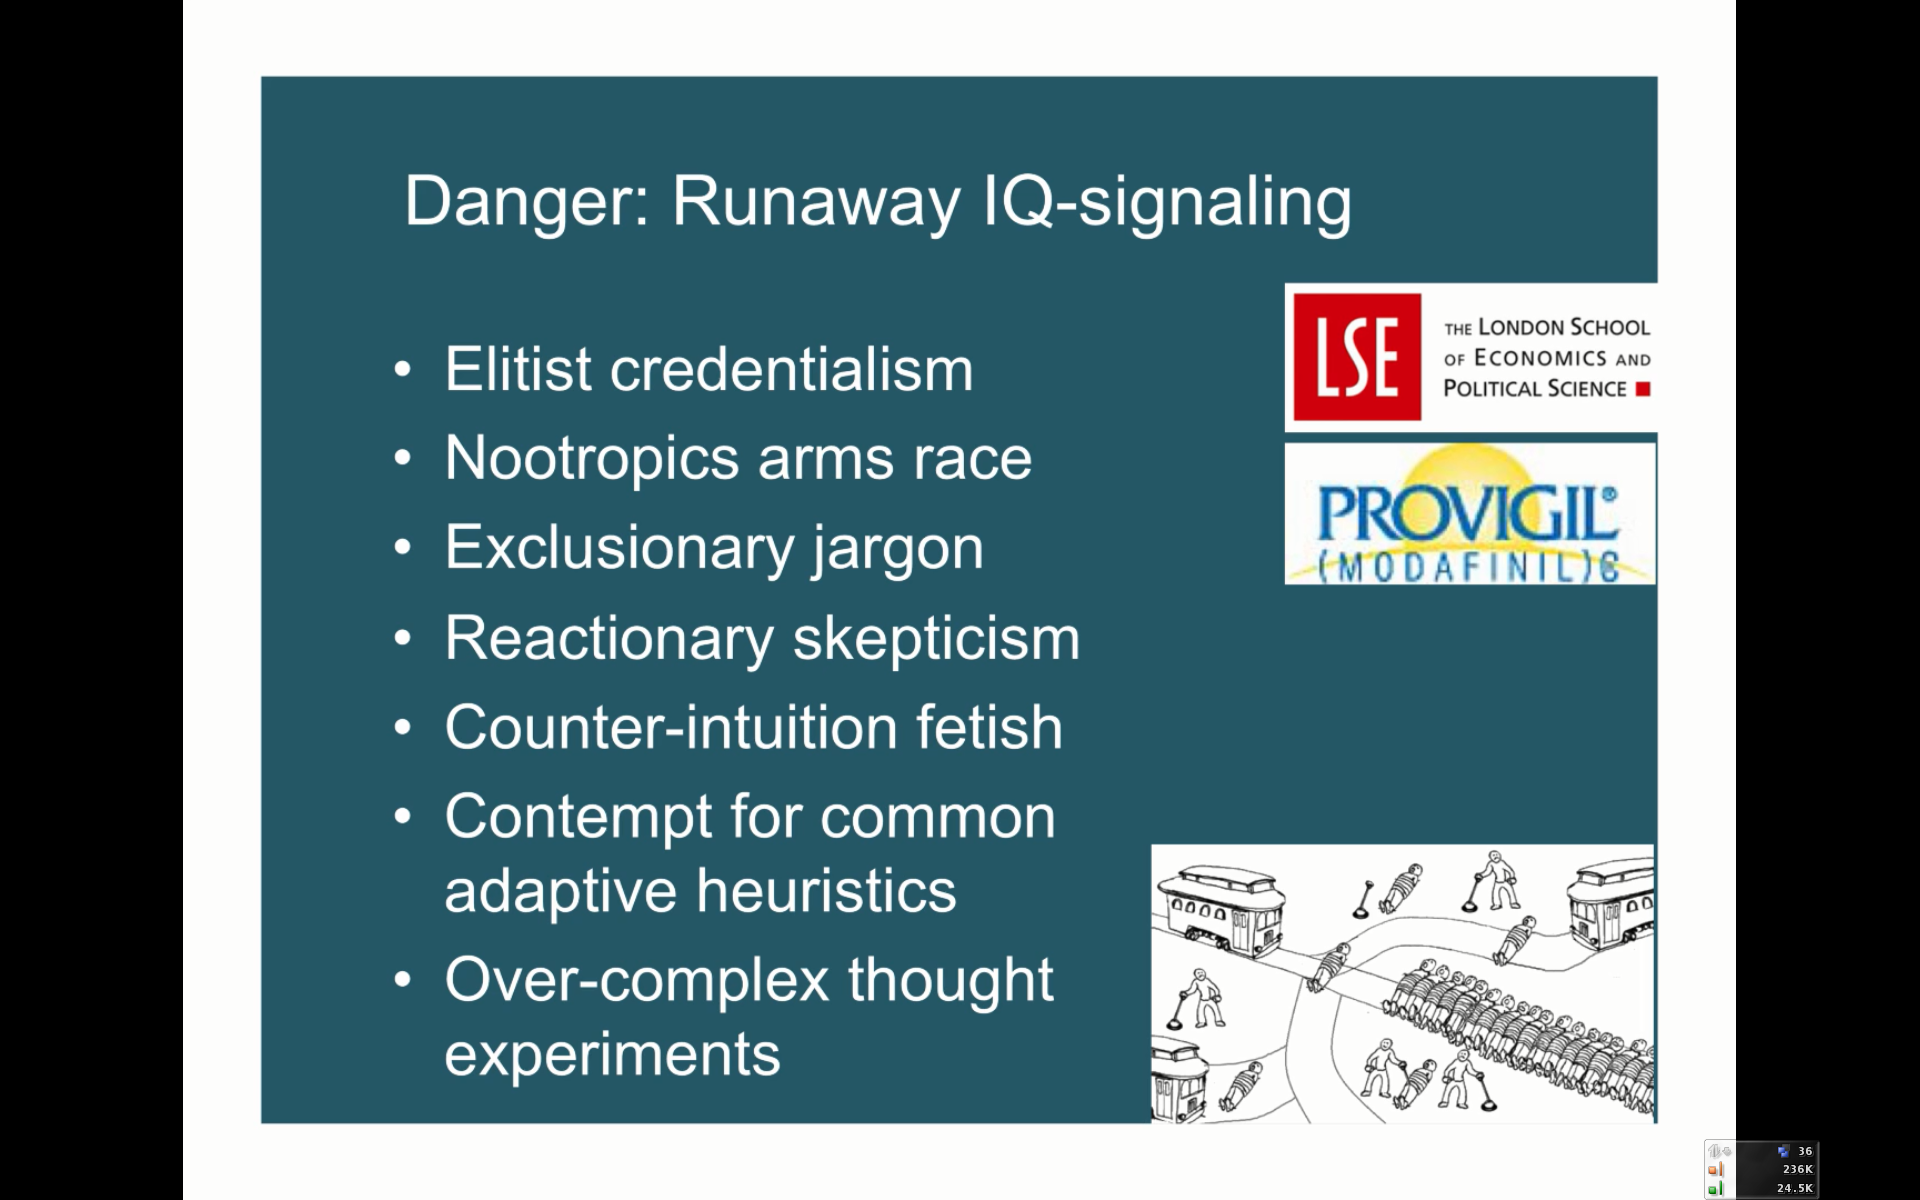 dangers of runaway intelligence signaling